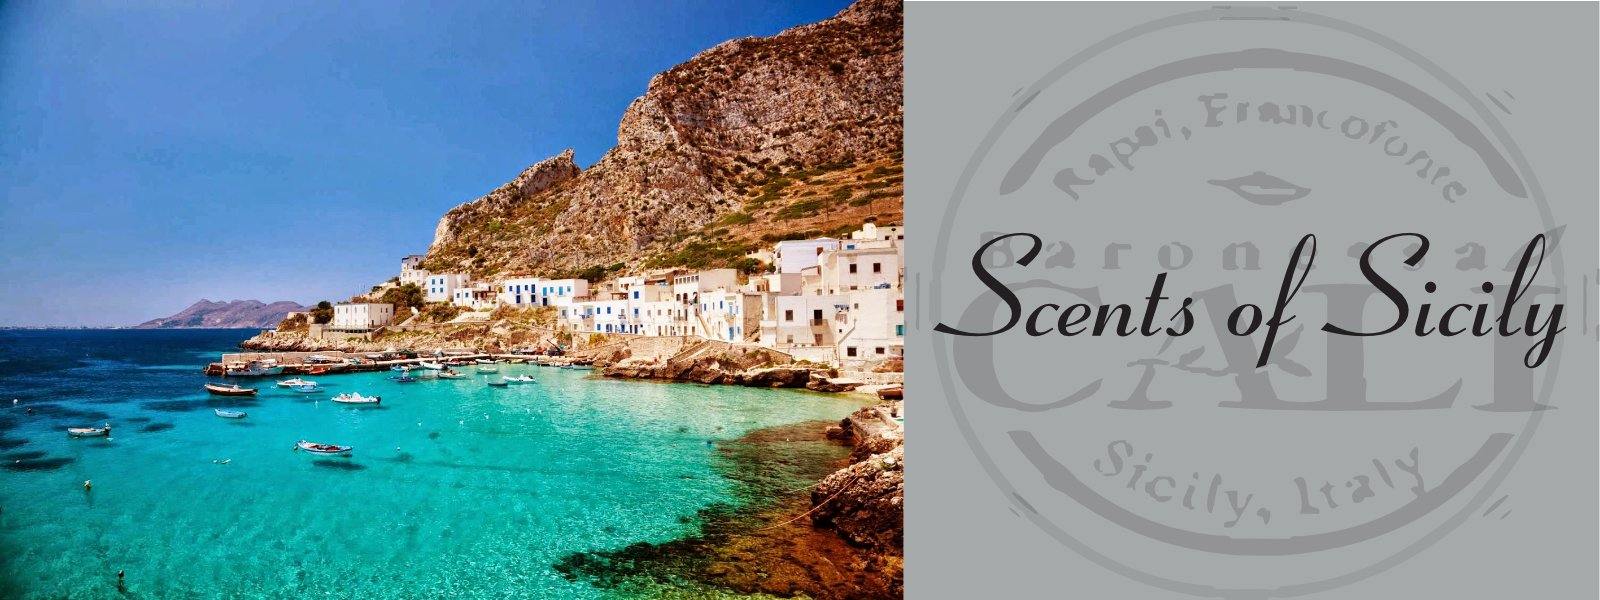 Scents of Sicily - CaliCosmetics.com